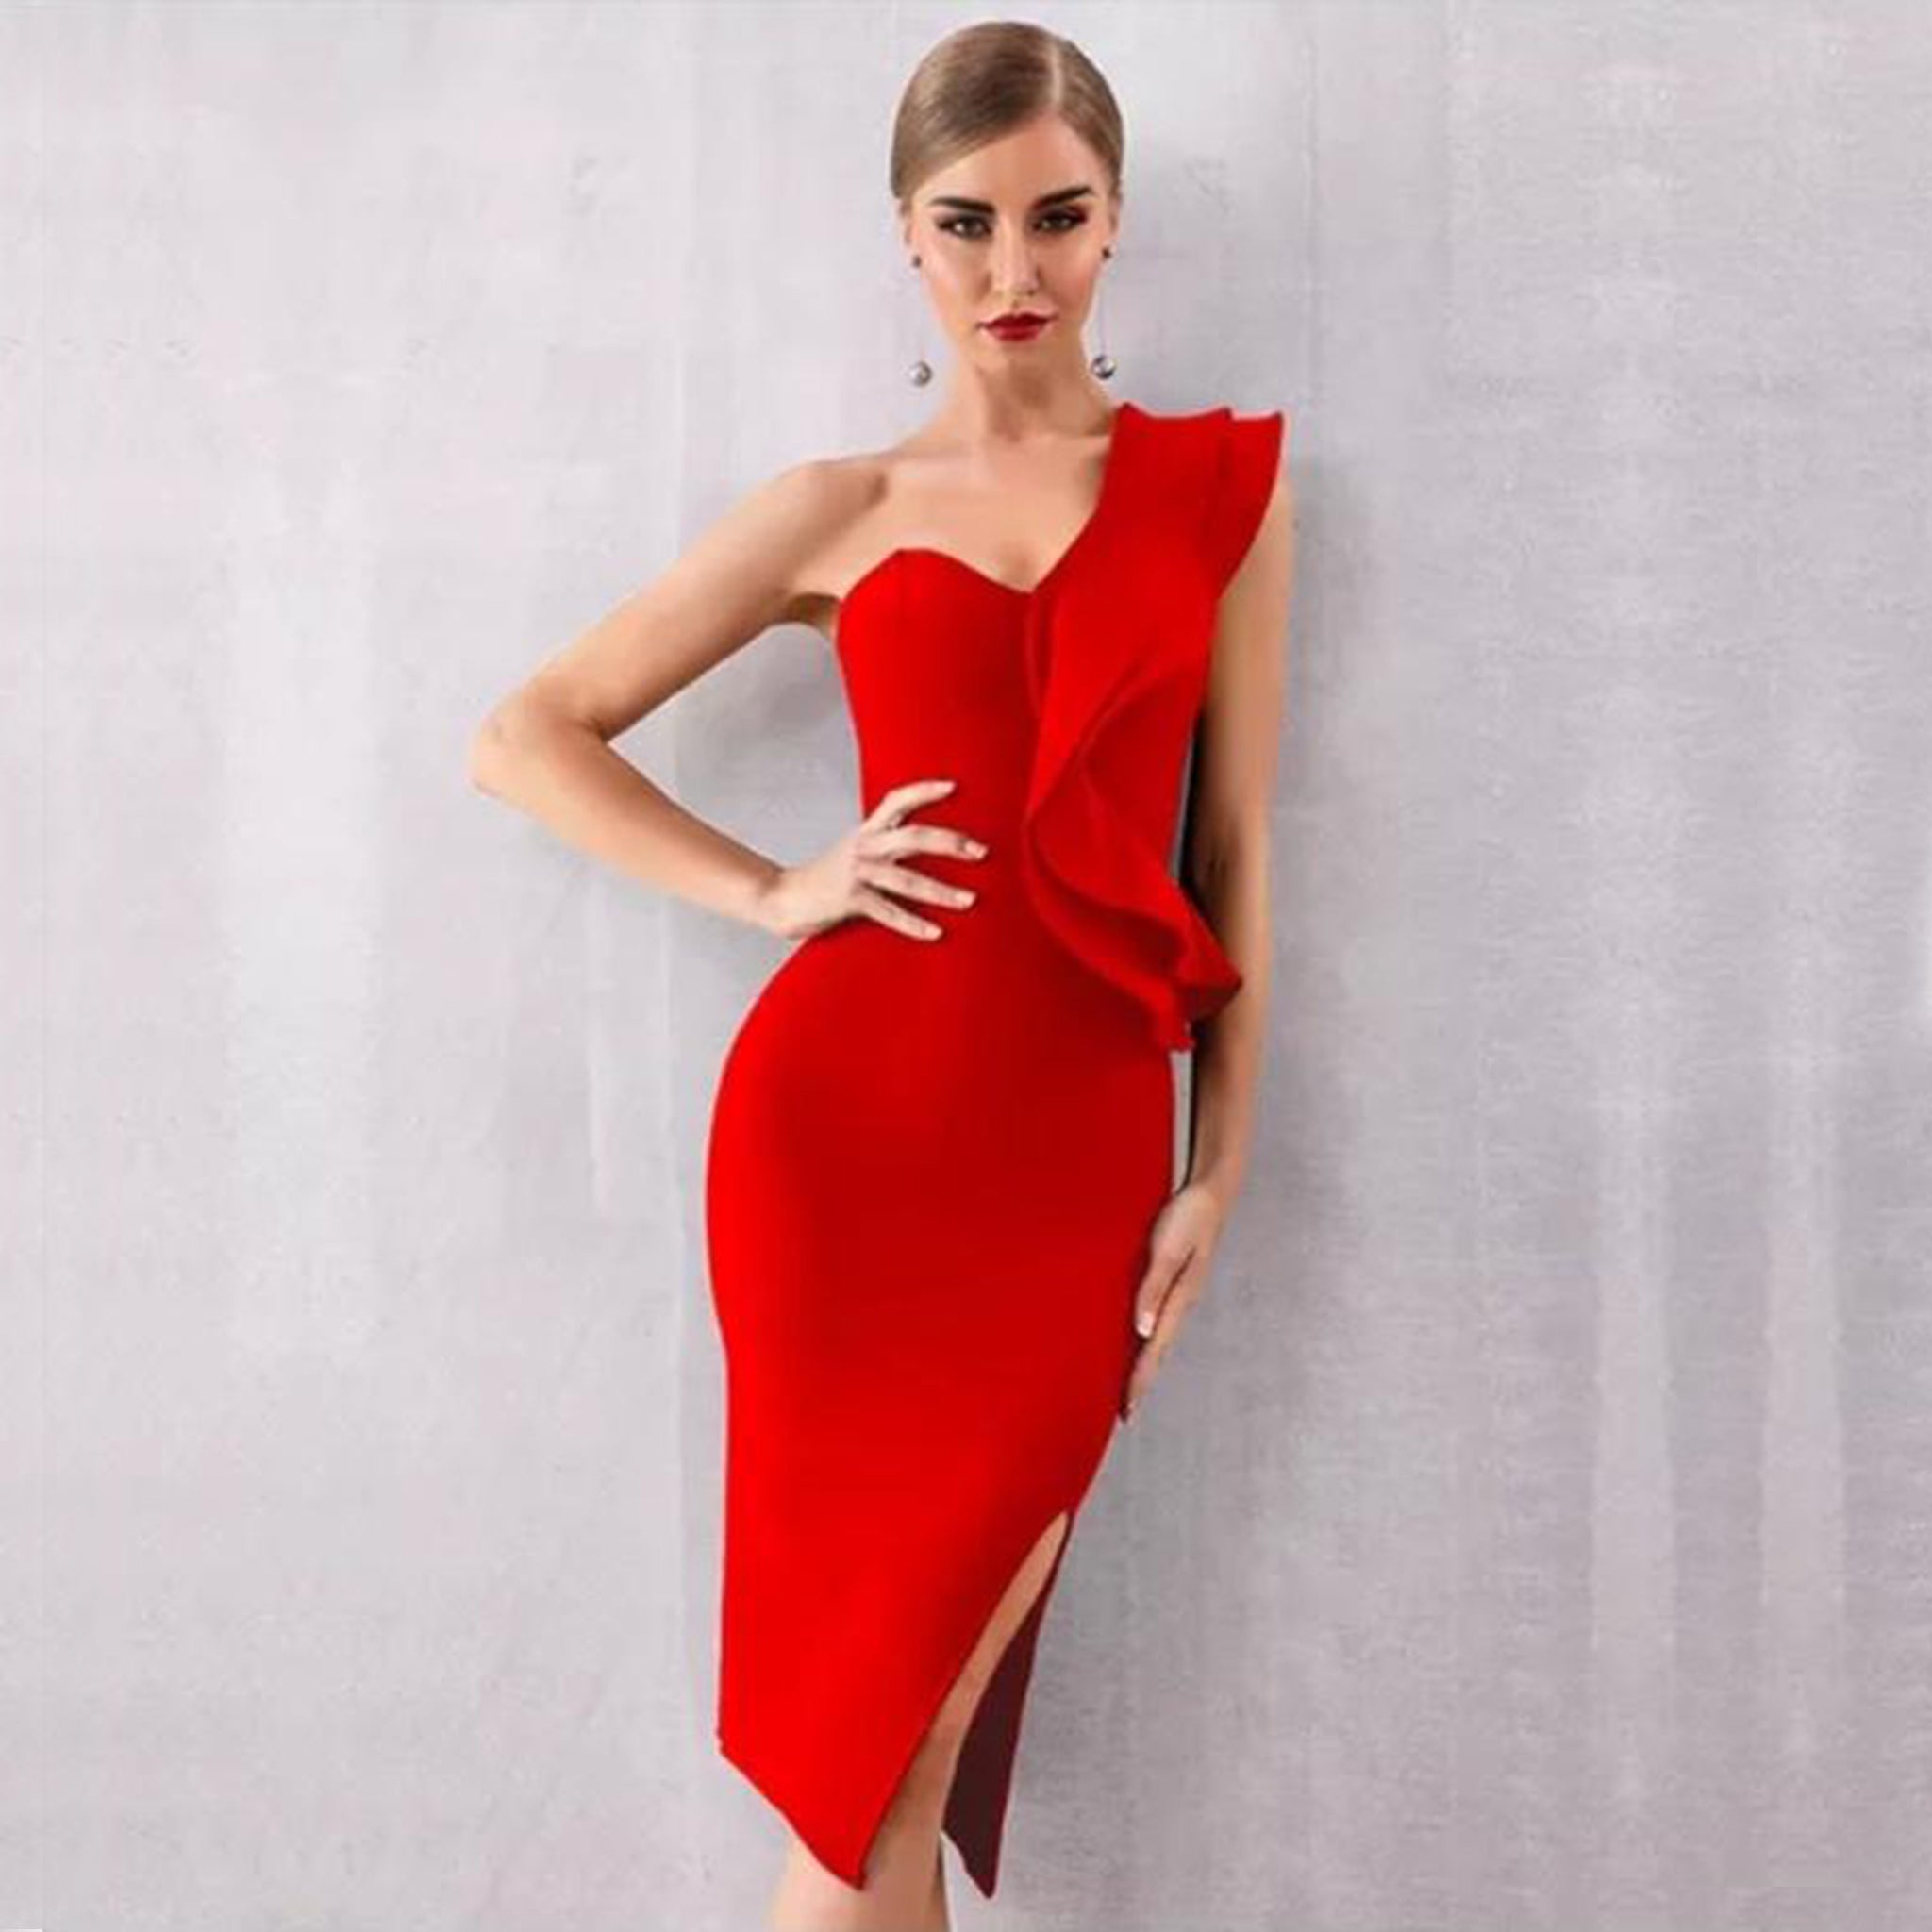 Red One-Shoulder Ruffle Bandage Dress - Top Glam Shop